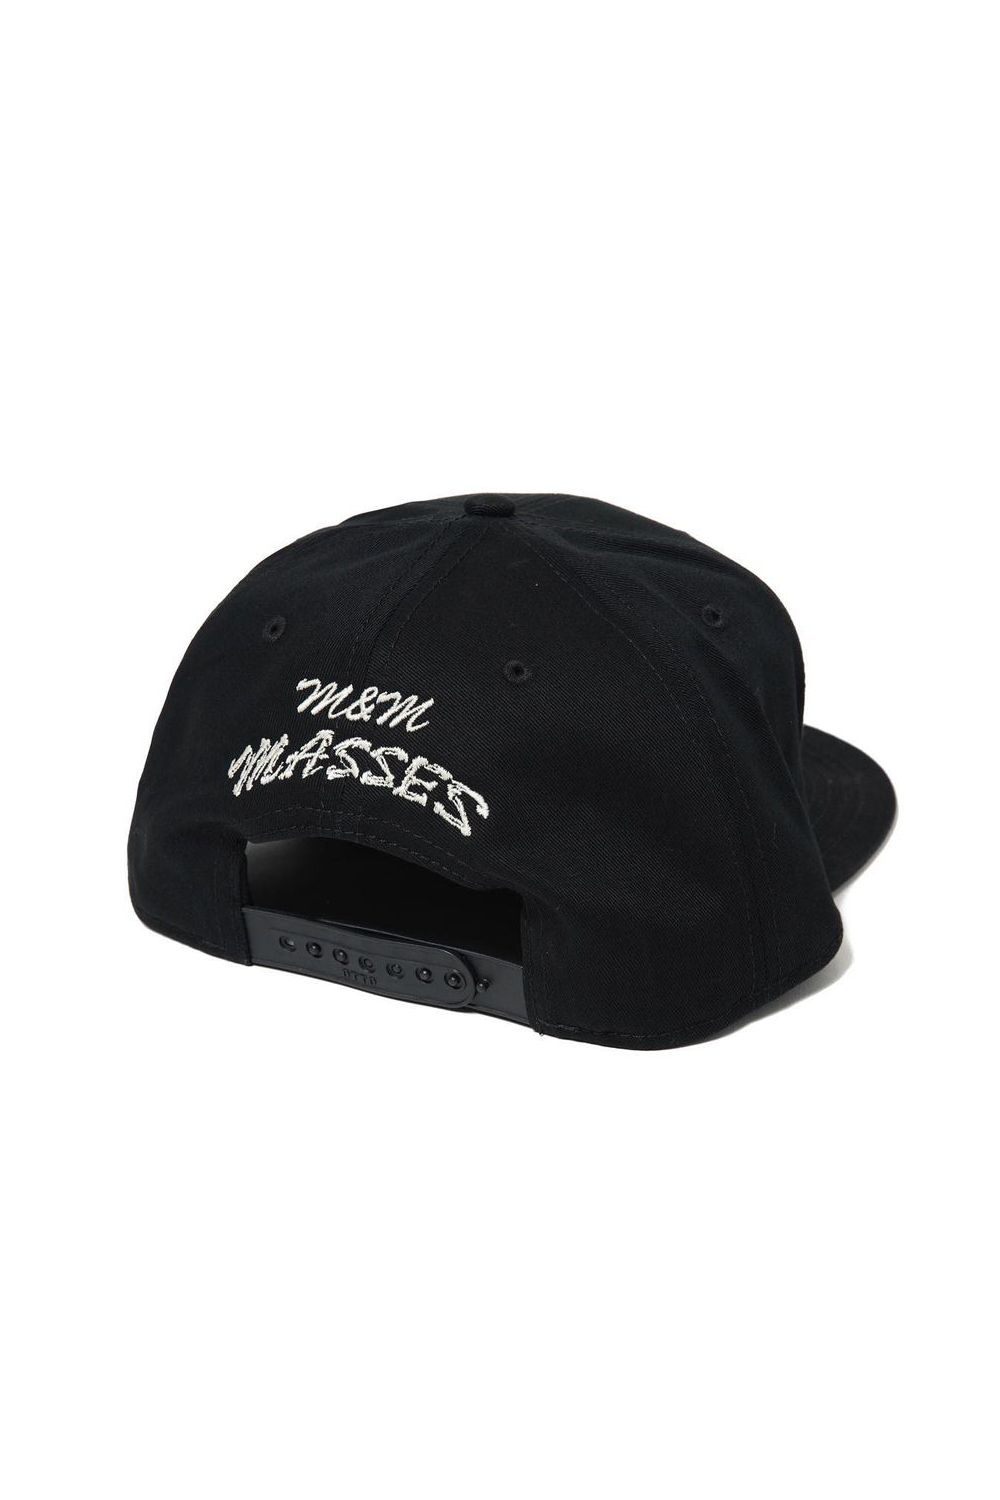 M&M CUSTOM PERFORMANCE - SNAPBACK BB CAP (×MASSES) (BLACK ...